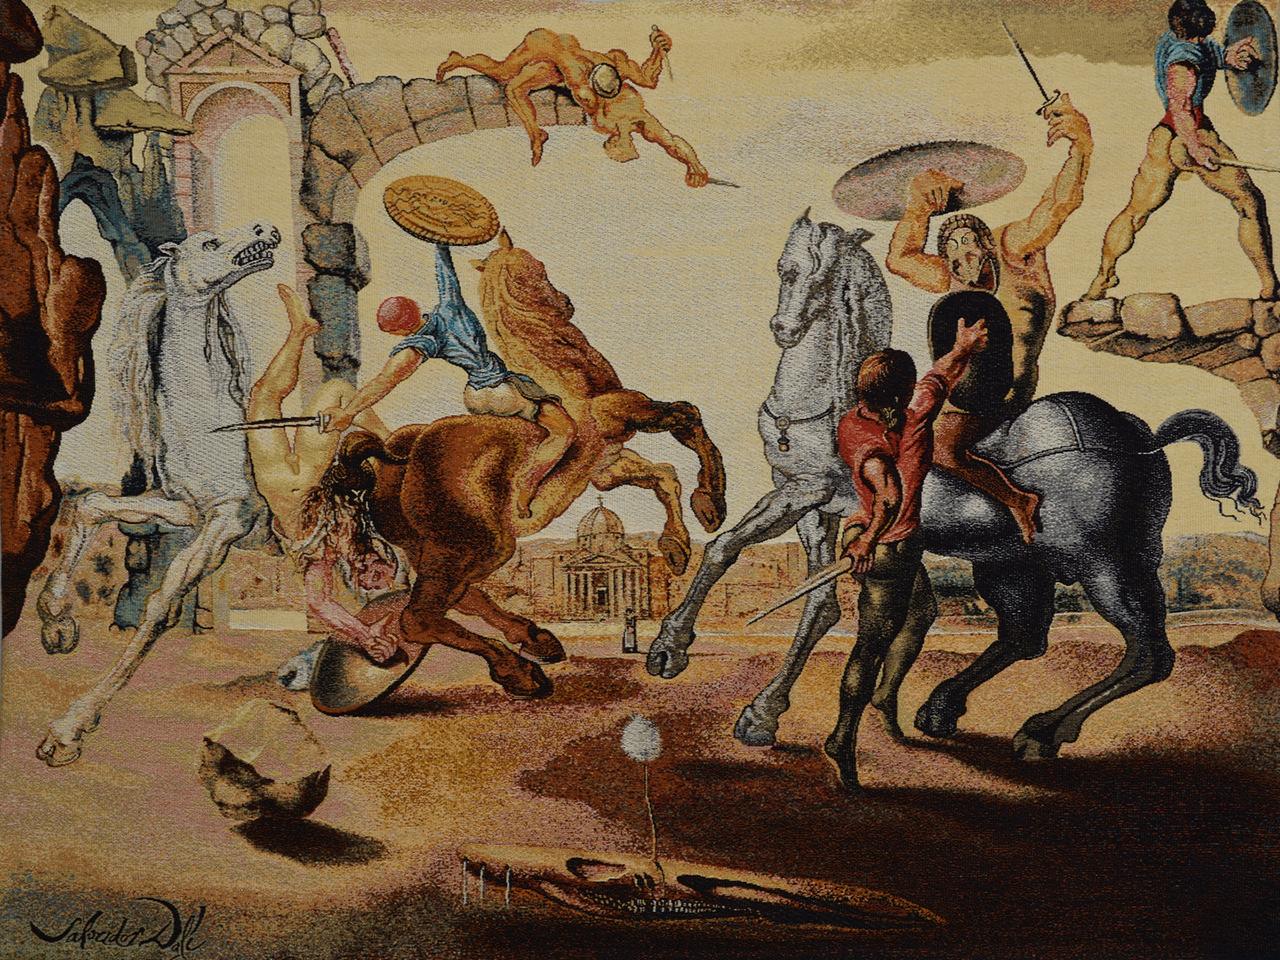 French Salvador Dali Tapestry, Battle Around a Dandelion